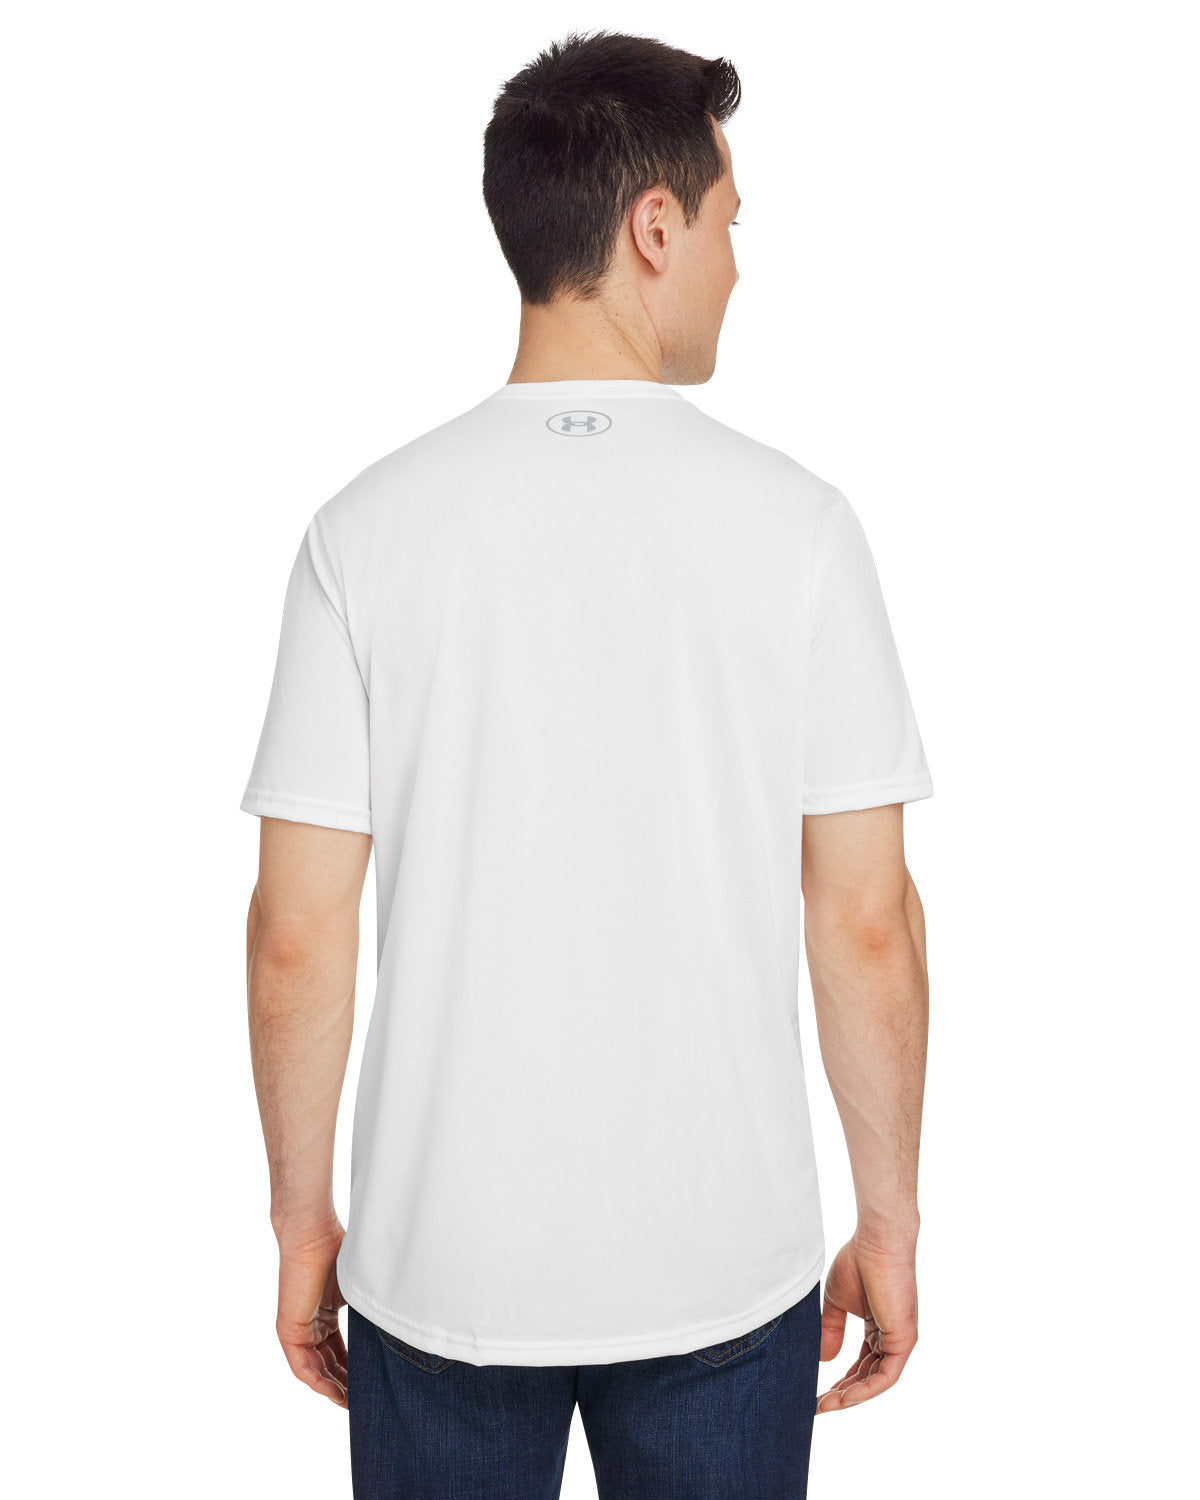 Under Armour Men's Tech Custom T-Shirts, White